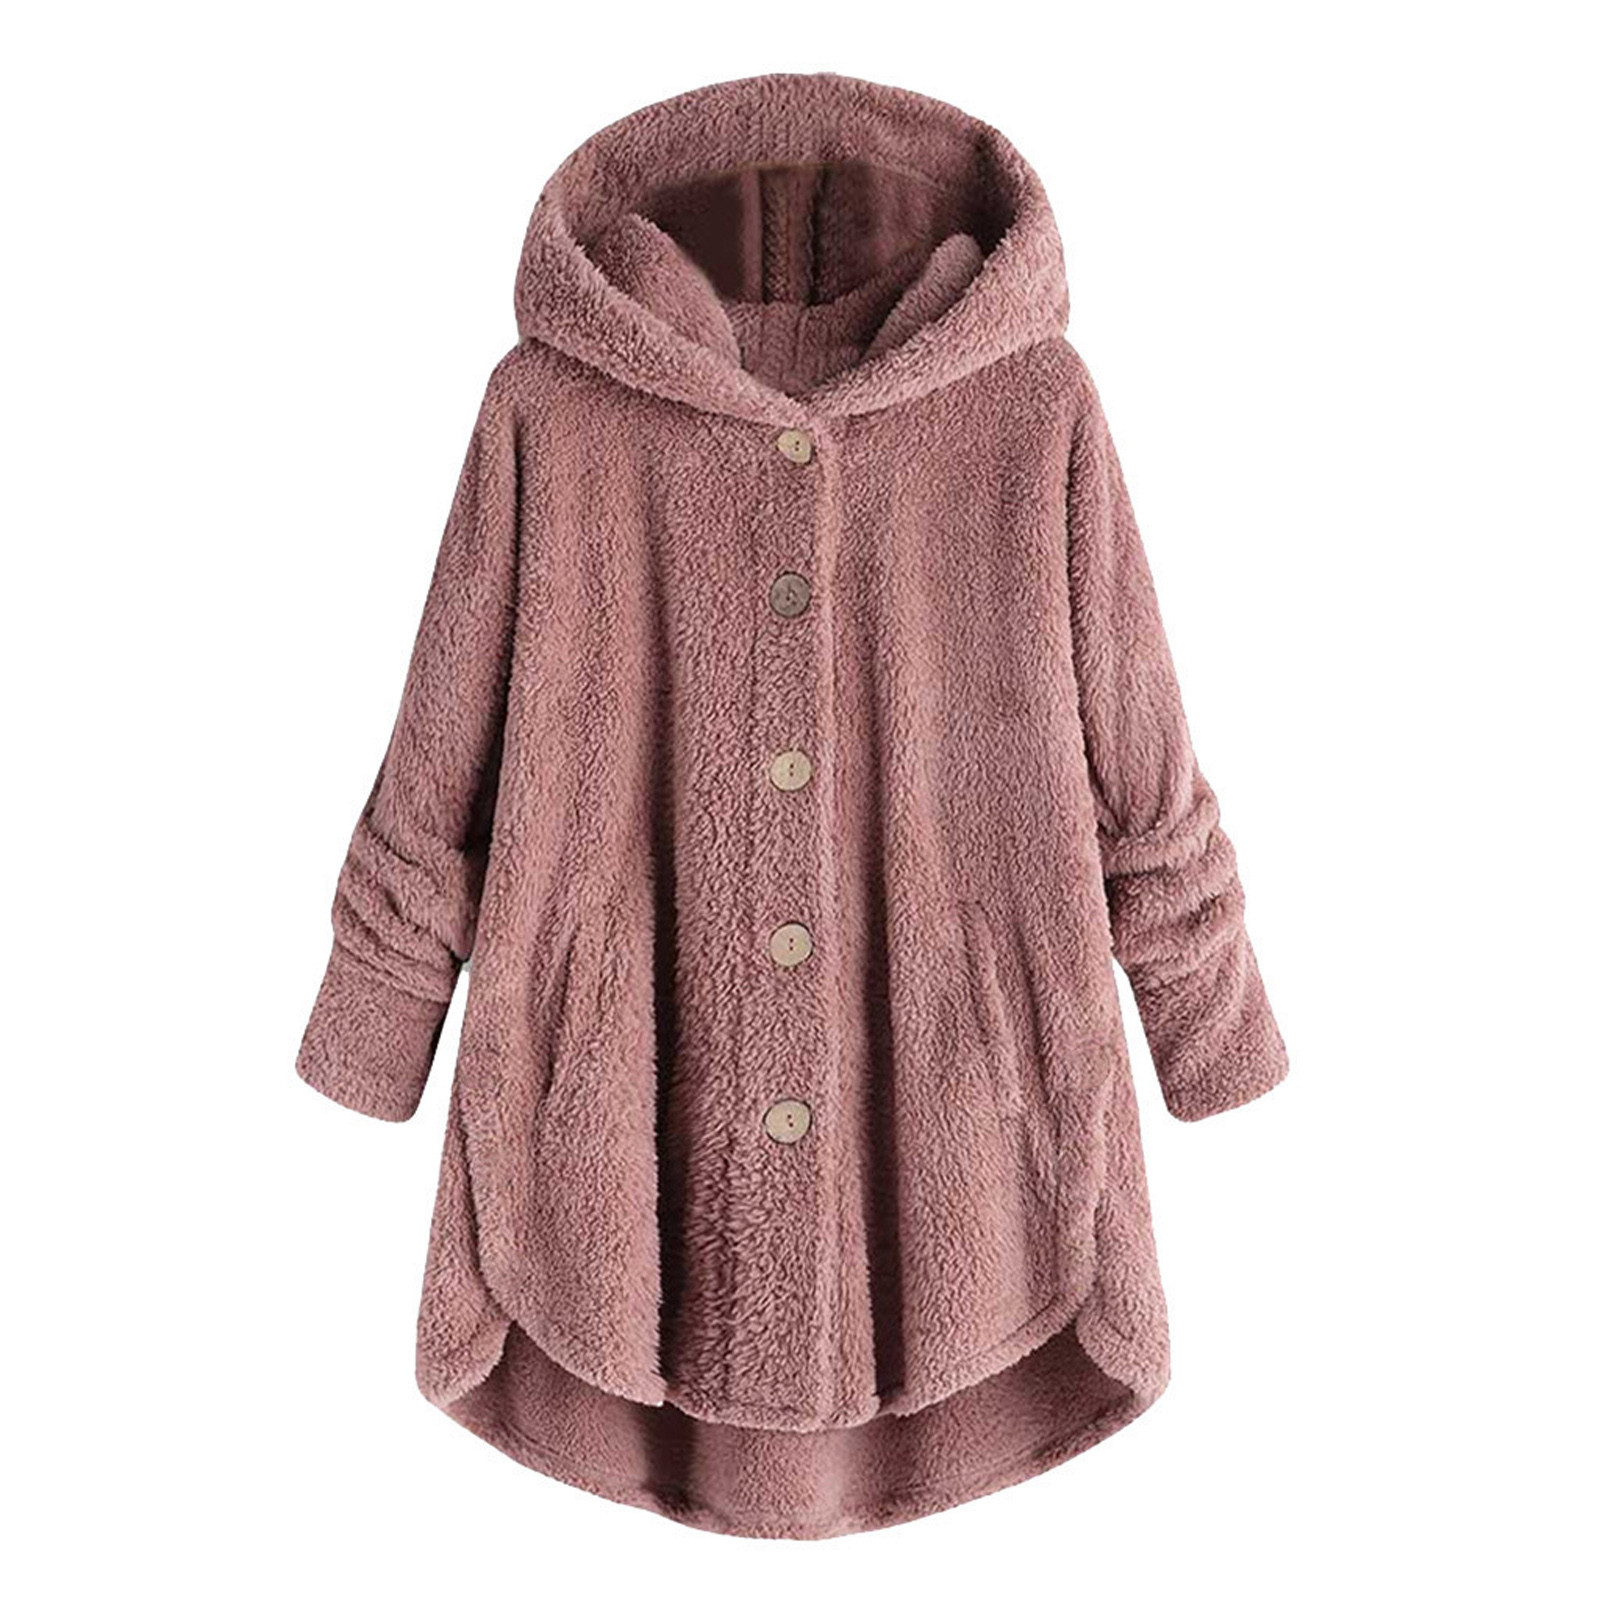 Mnycxen Women Plus Size Button Plush Tops Hooded Loose Cardigan Wool Coat Winter Jacket - image 1 of 5